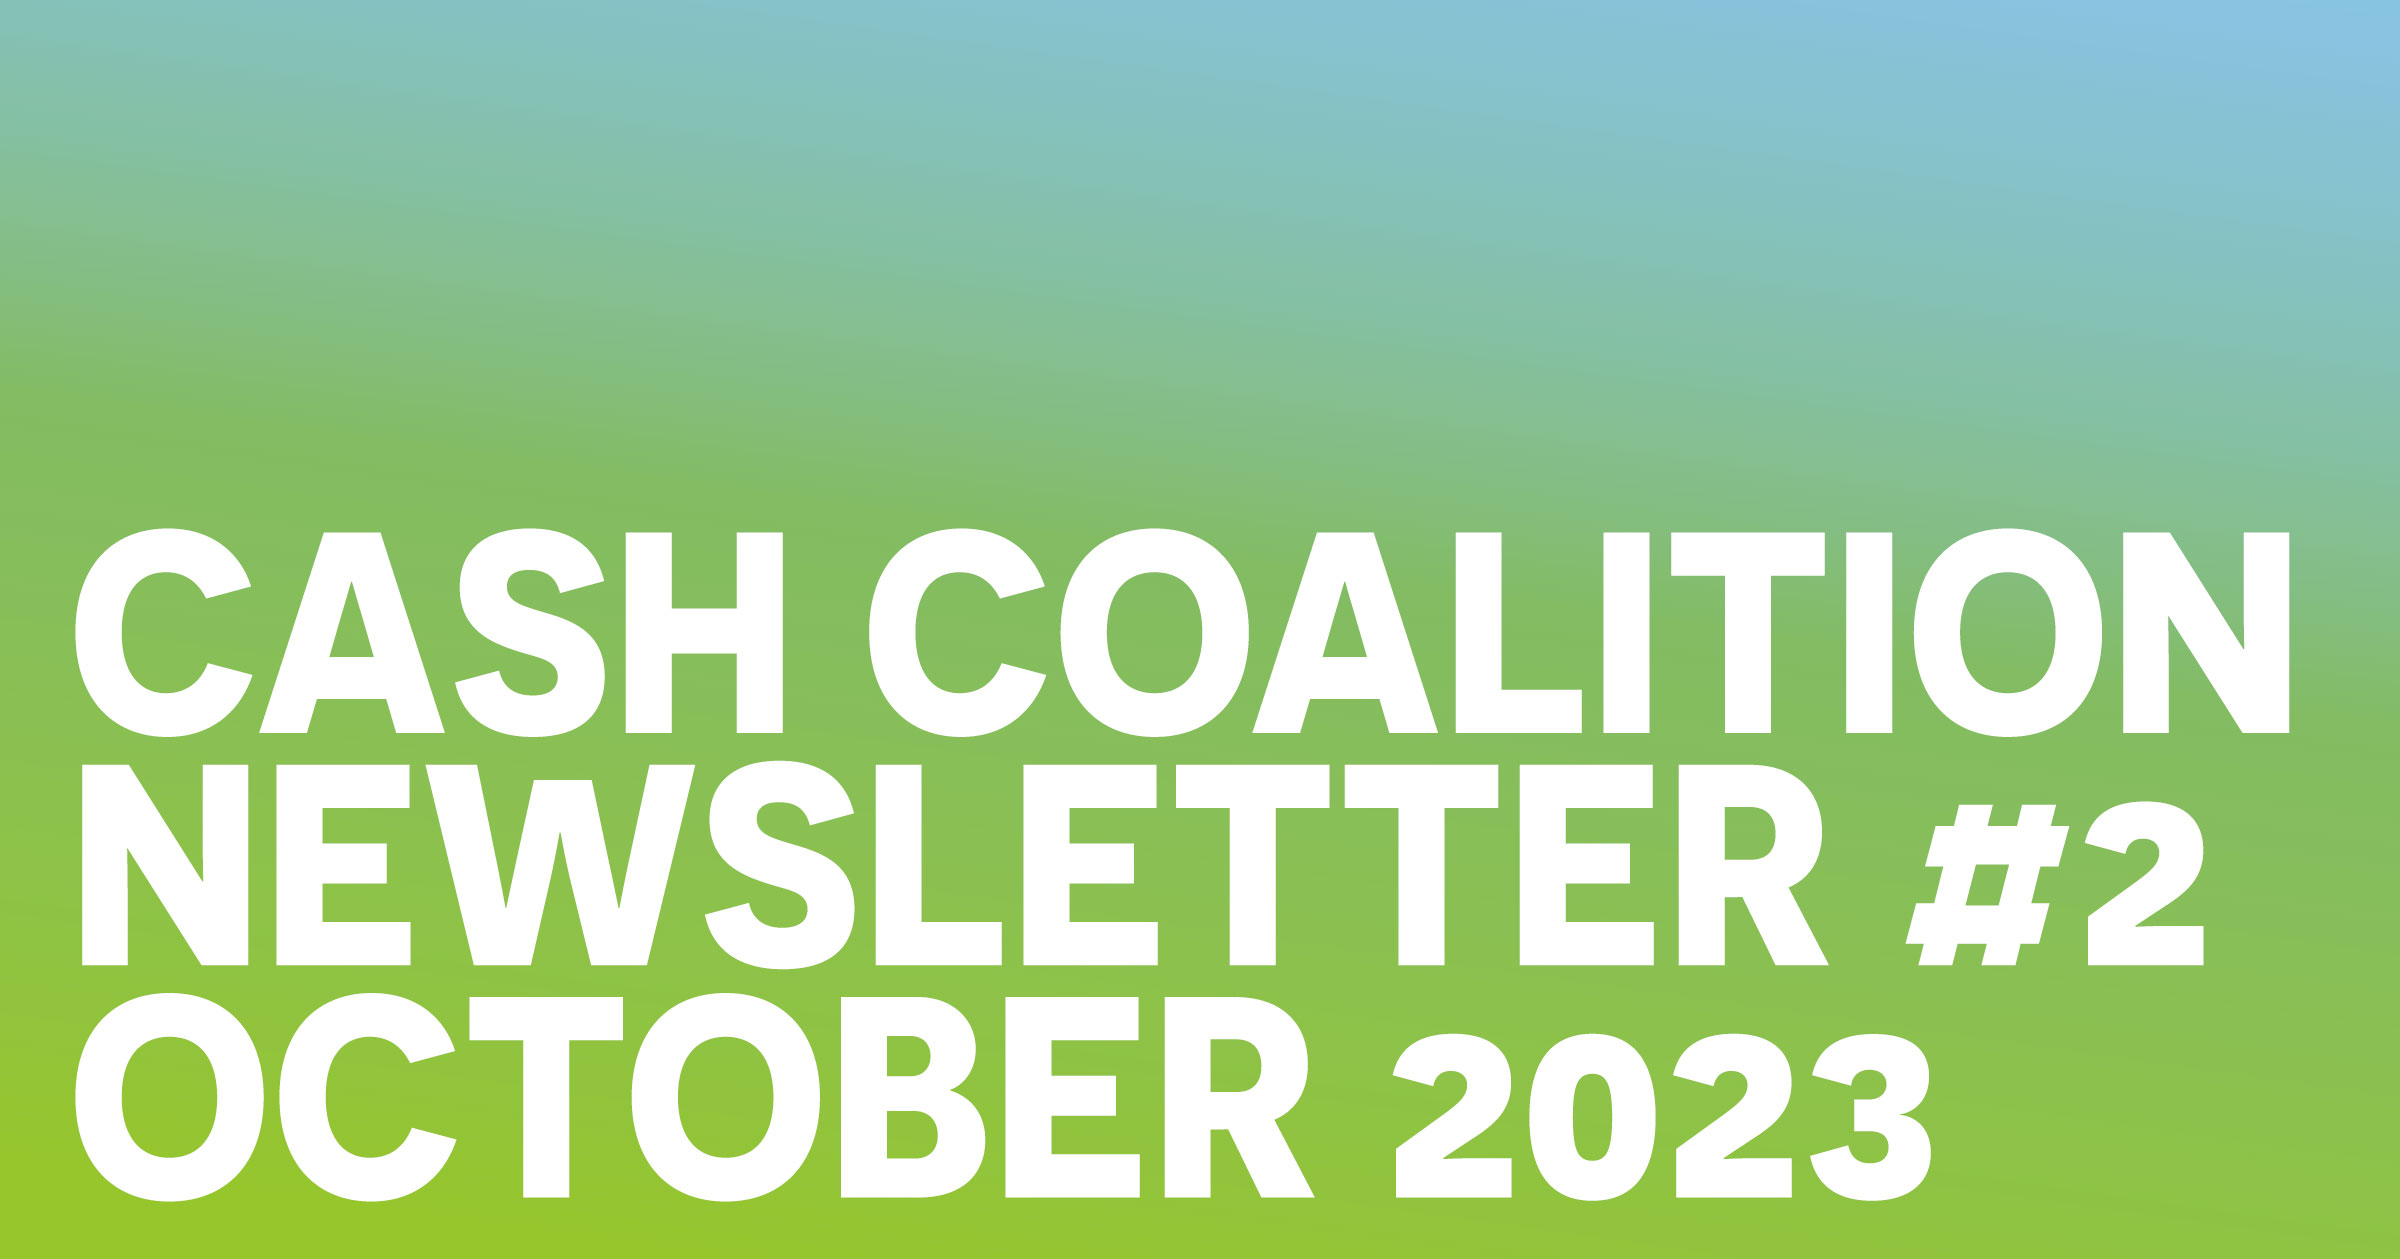 CASH Coalition Newsletter #2, October 2023